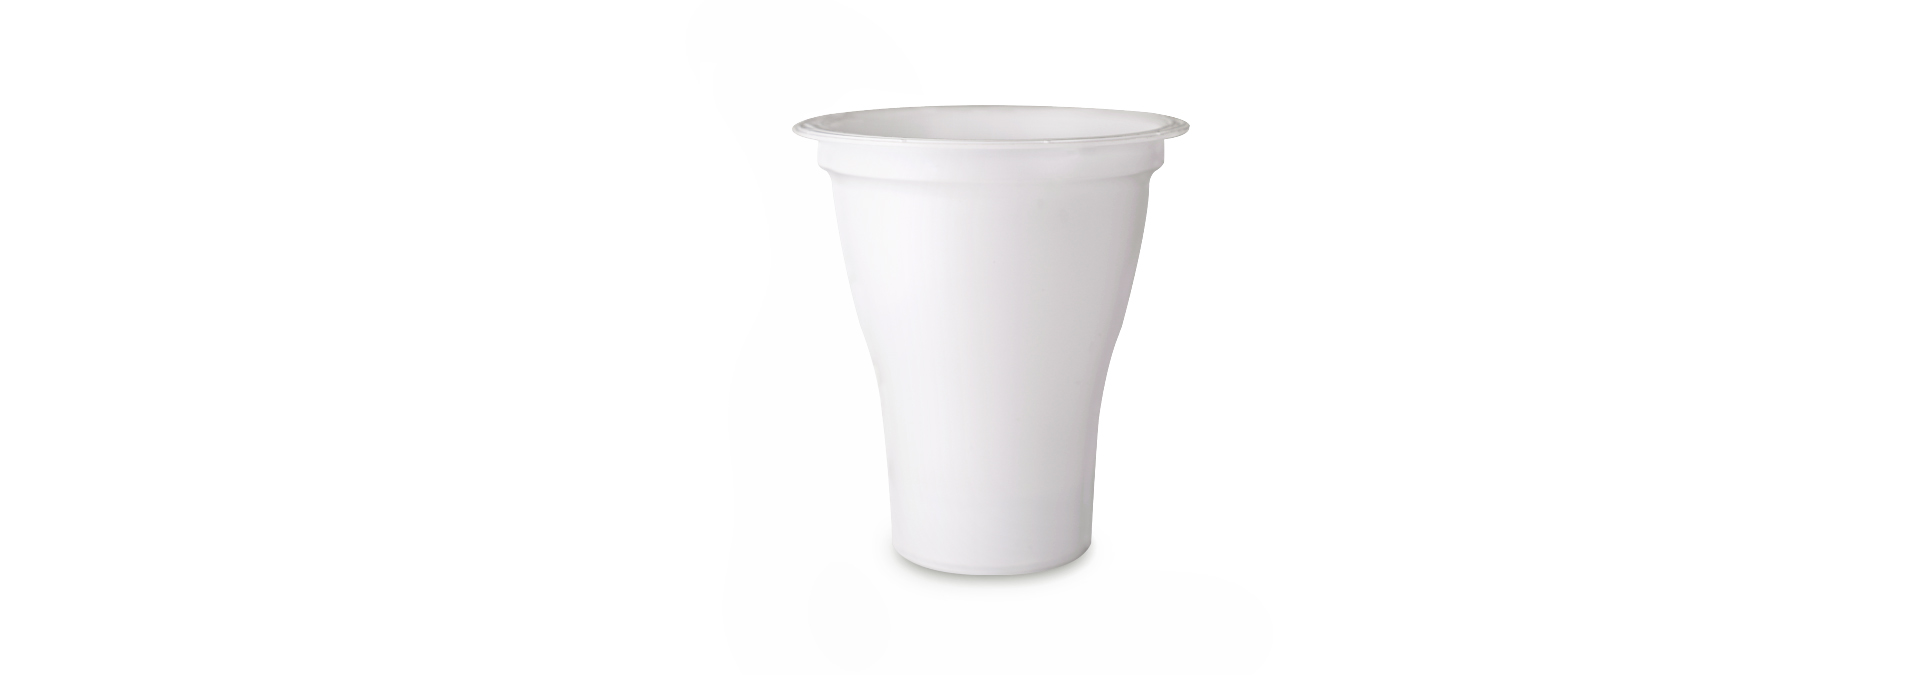 320ml arc-shaped cup (95 calibre)